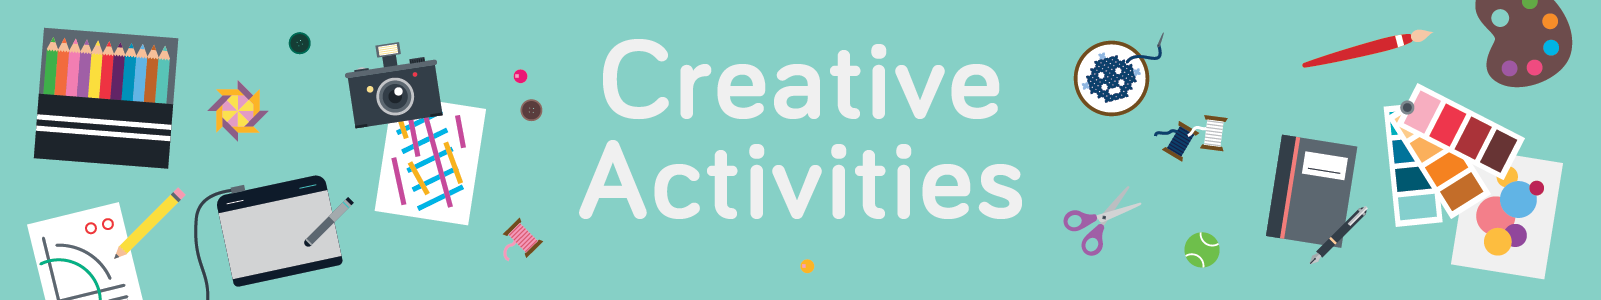 Creative Activities banner graphic